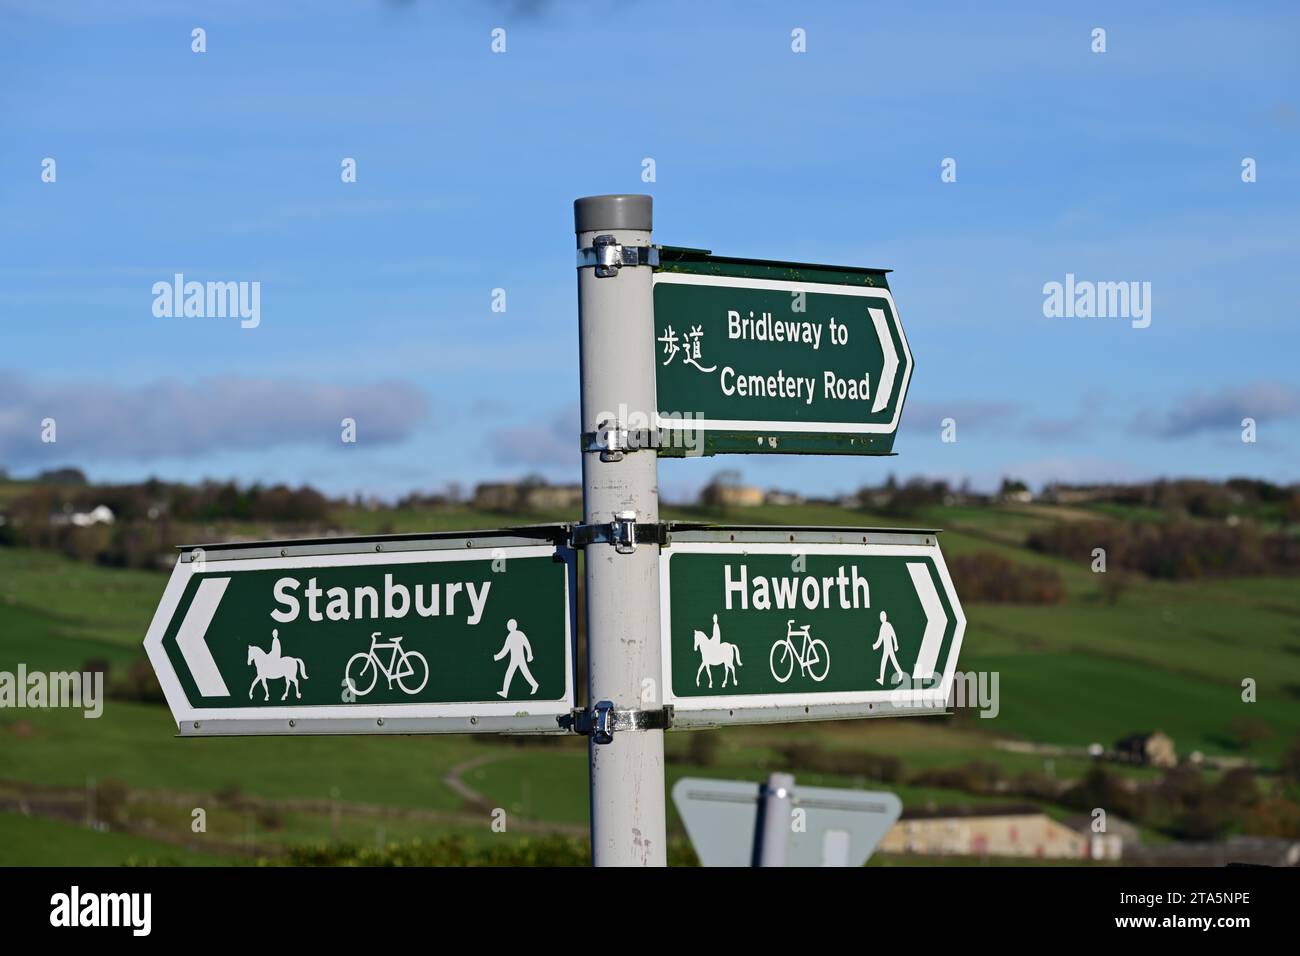 Indicazioni stradali per Stanbury, Haworth and Cemetery Road, Haworth Moor, West Yorkshire. Foto Stock